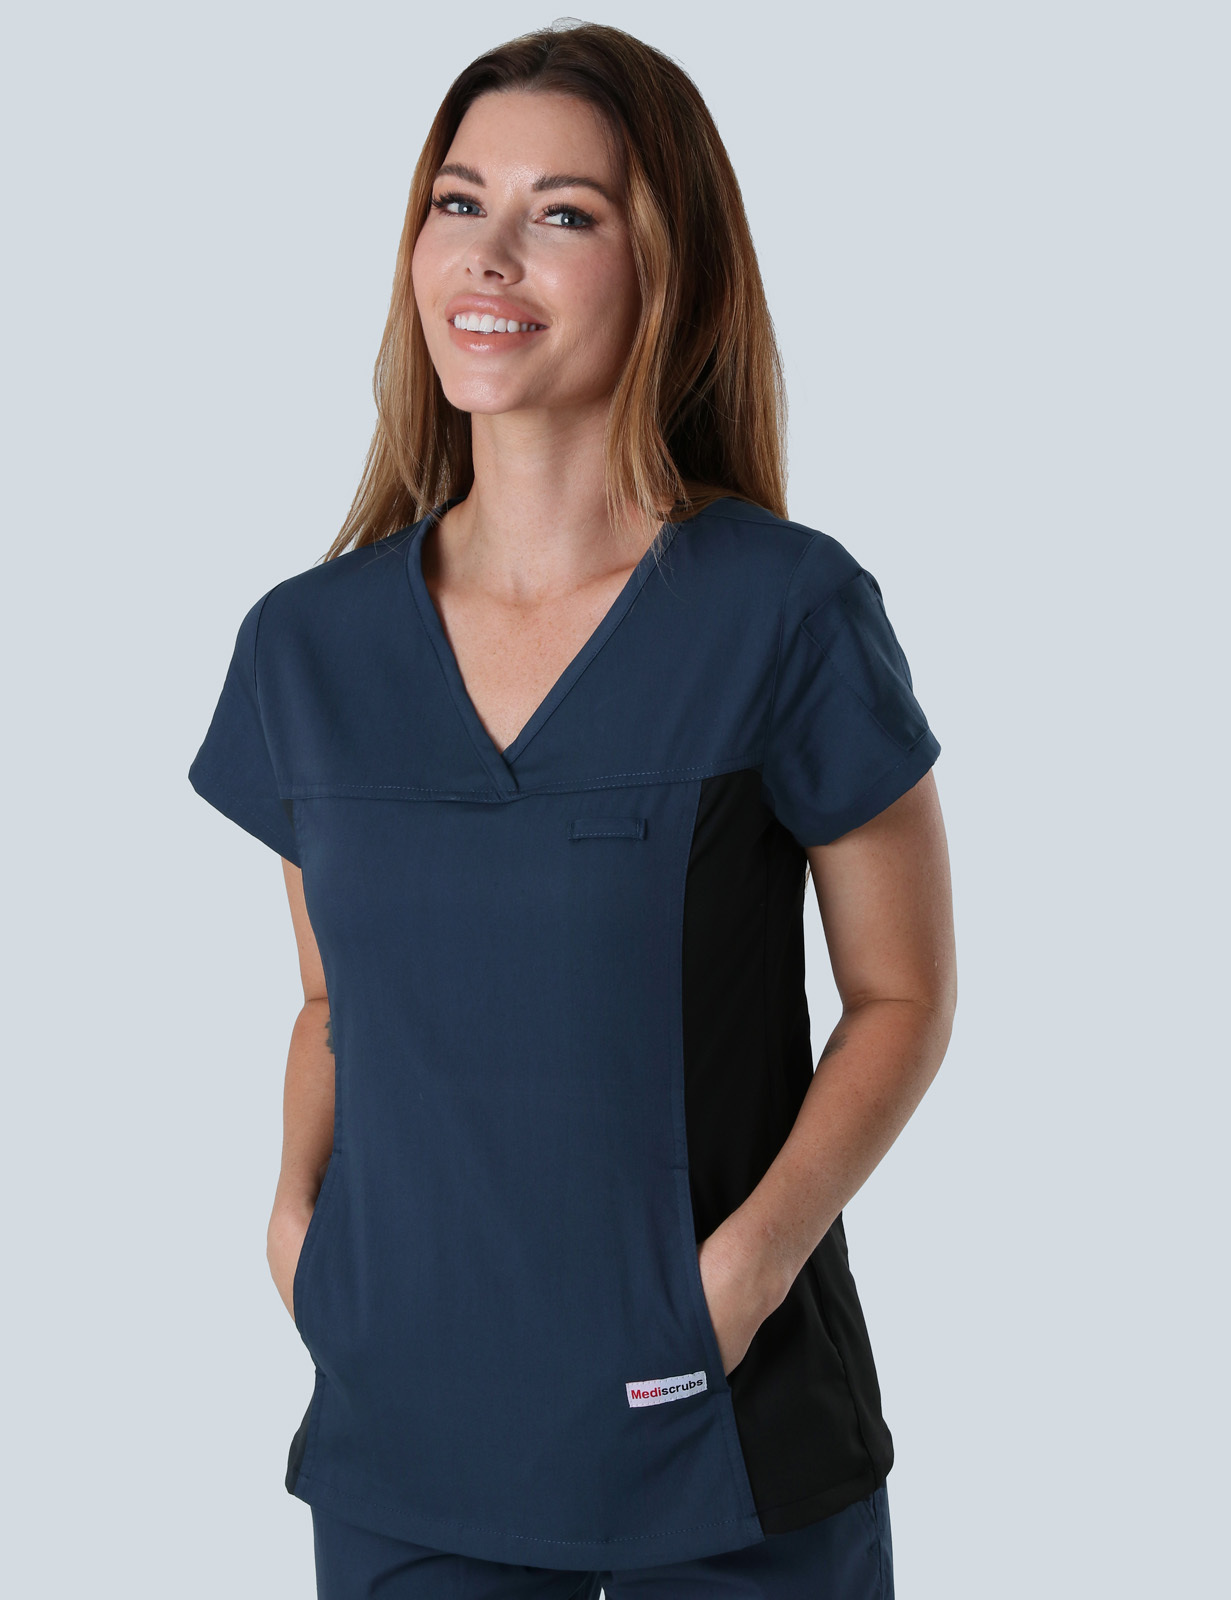 Ipswich Hospital Clinical Measurements Uniform Set Bundle (Women's Fit Spandex and Utility Pants in Navy incl Logos)